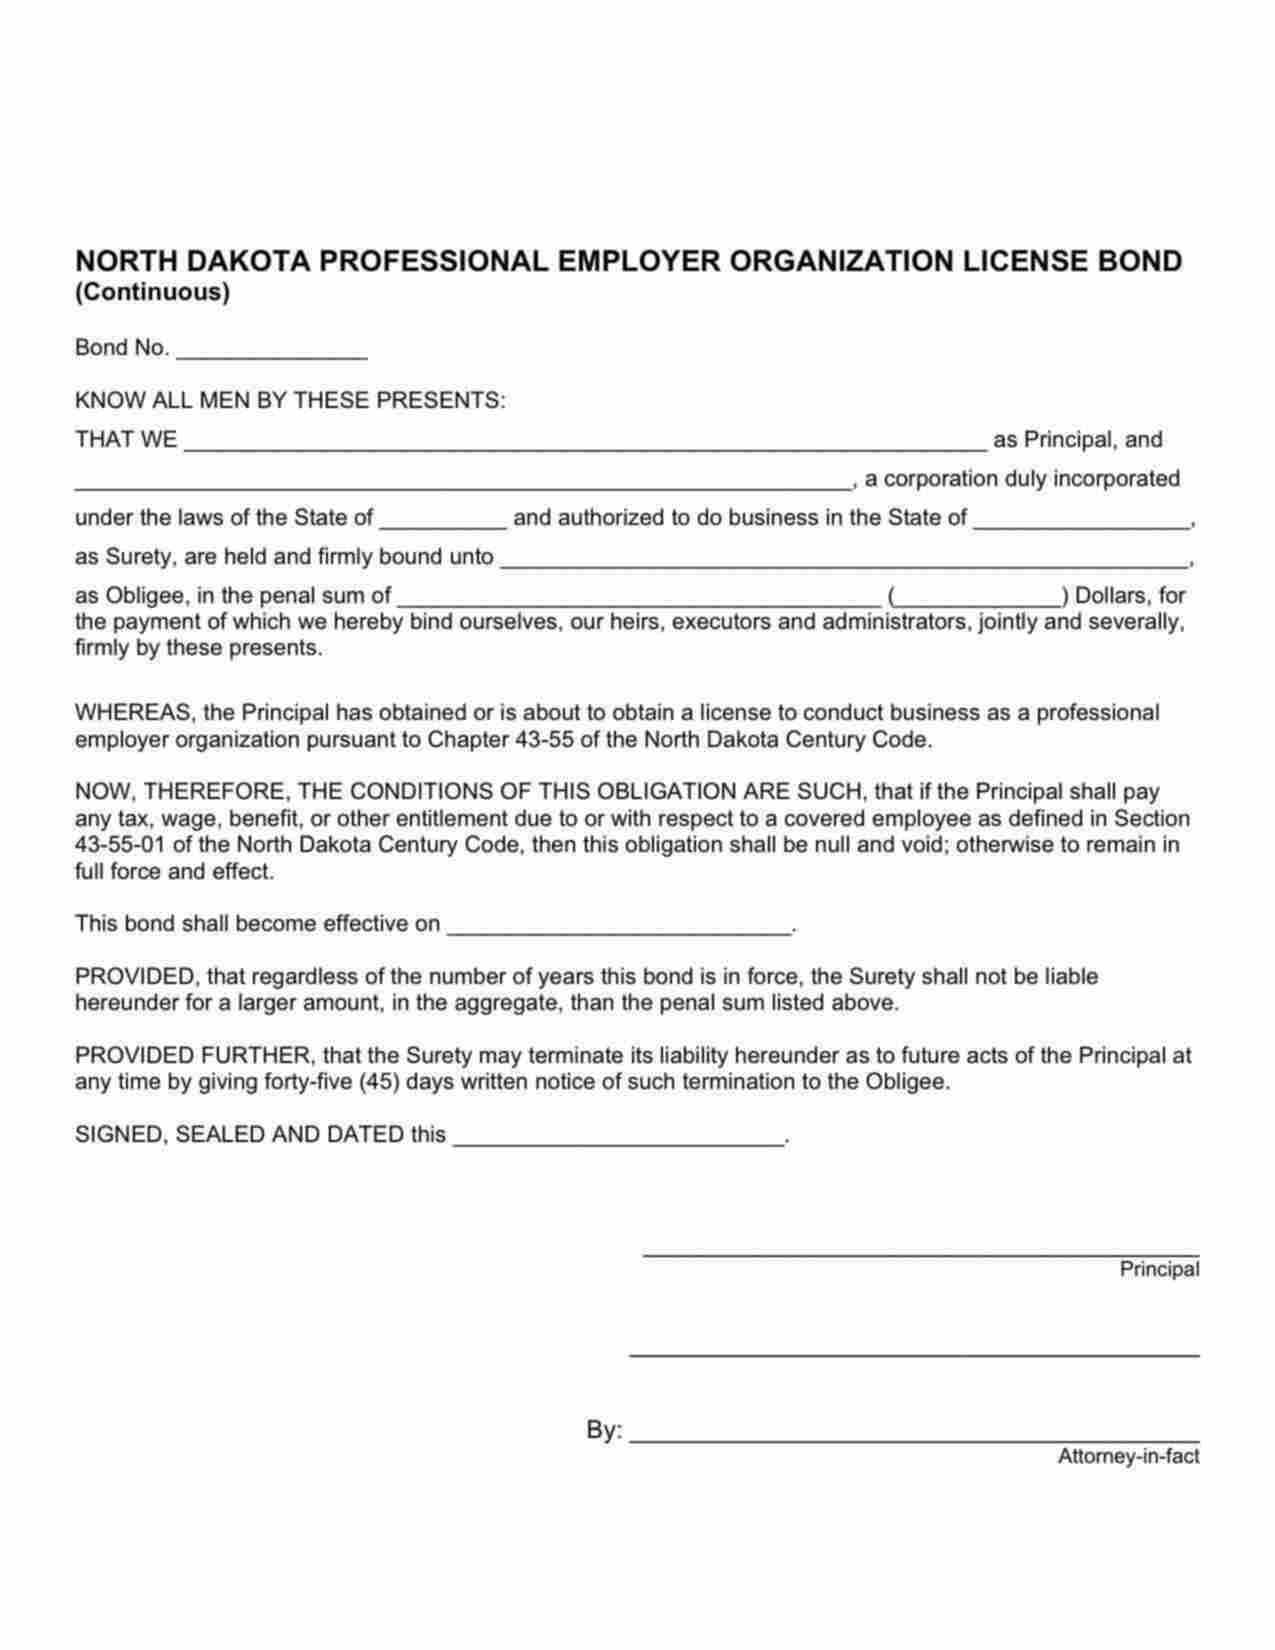 North Dakota Professional Employer Organization Bond Form